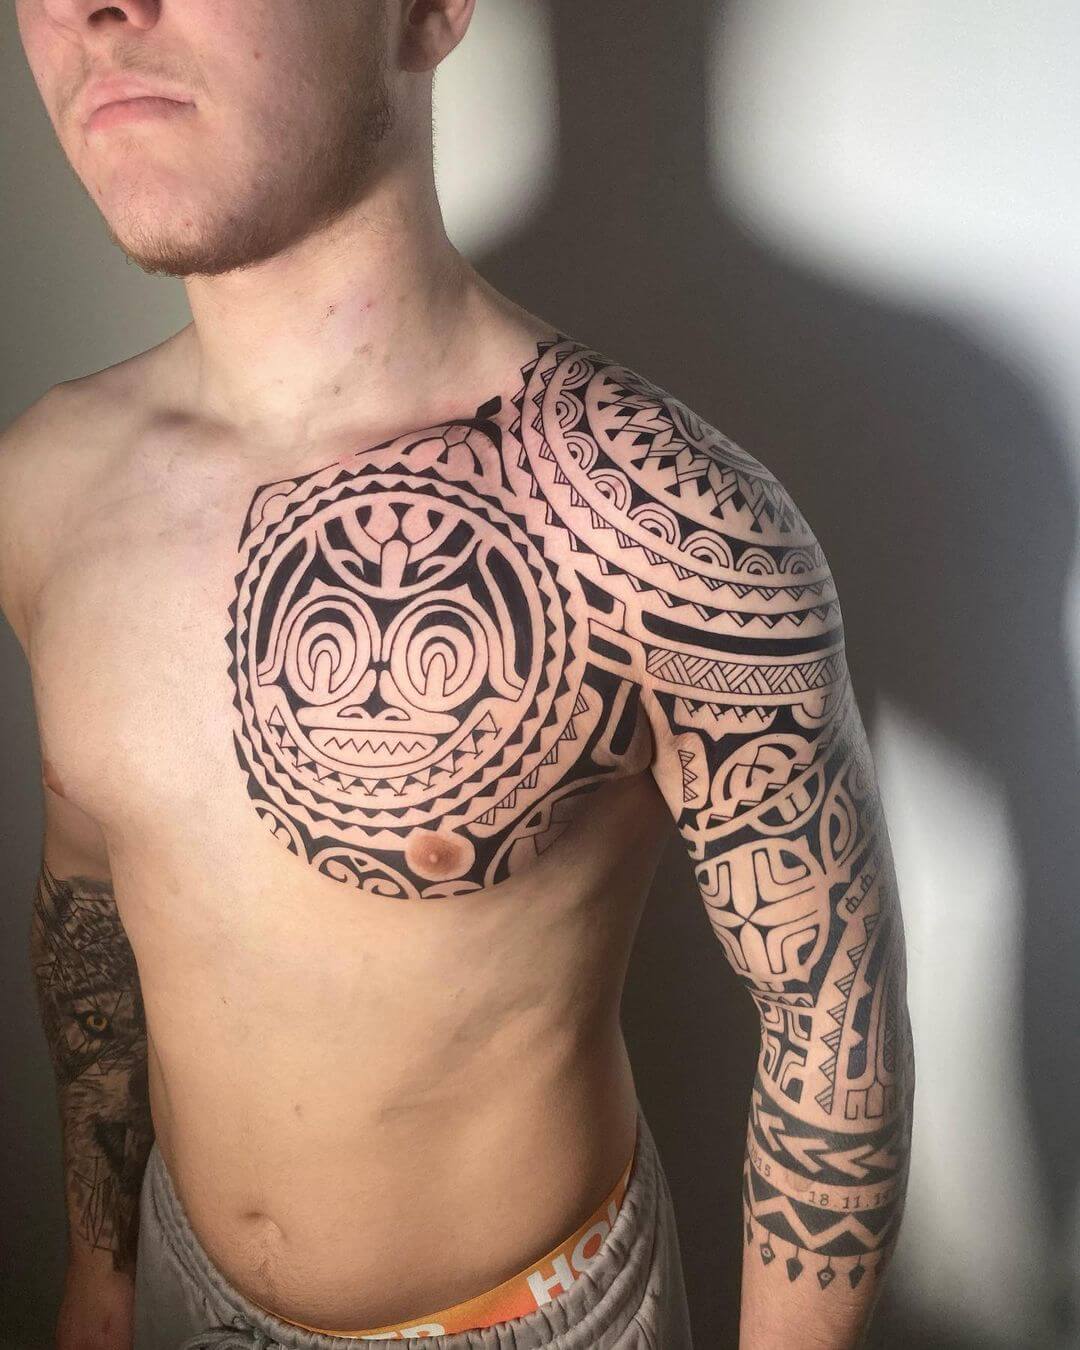 Simple Tattoos for Men | Forearm band tattoos, Tattoos, Band tattoo designs